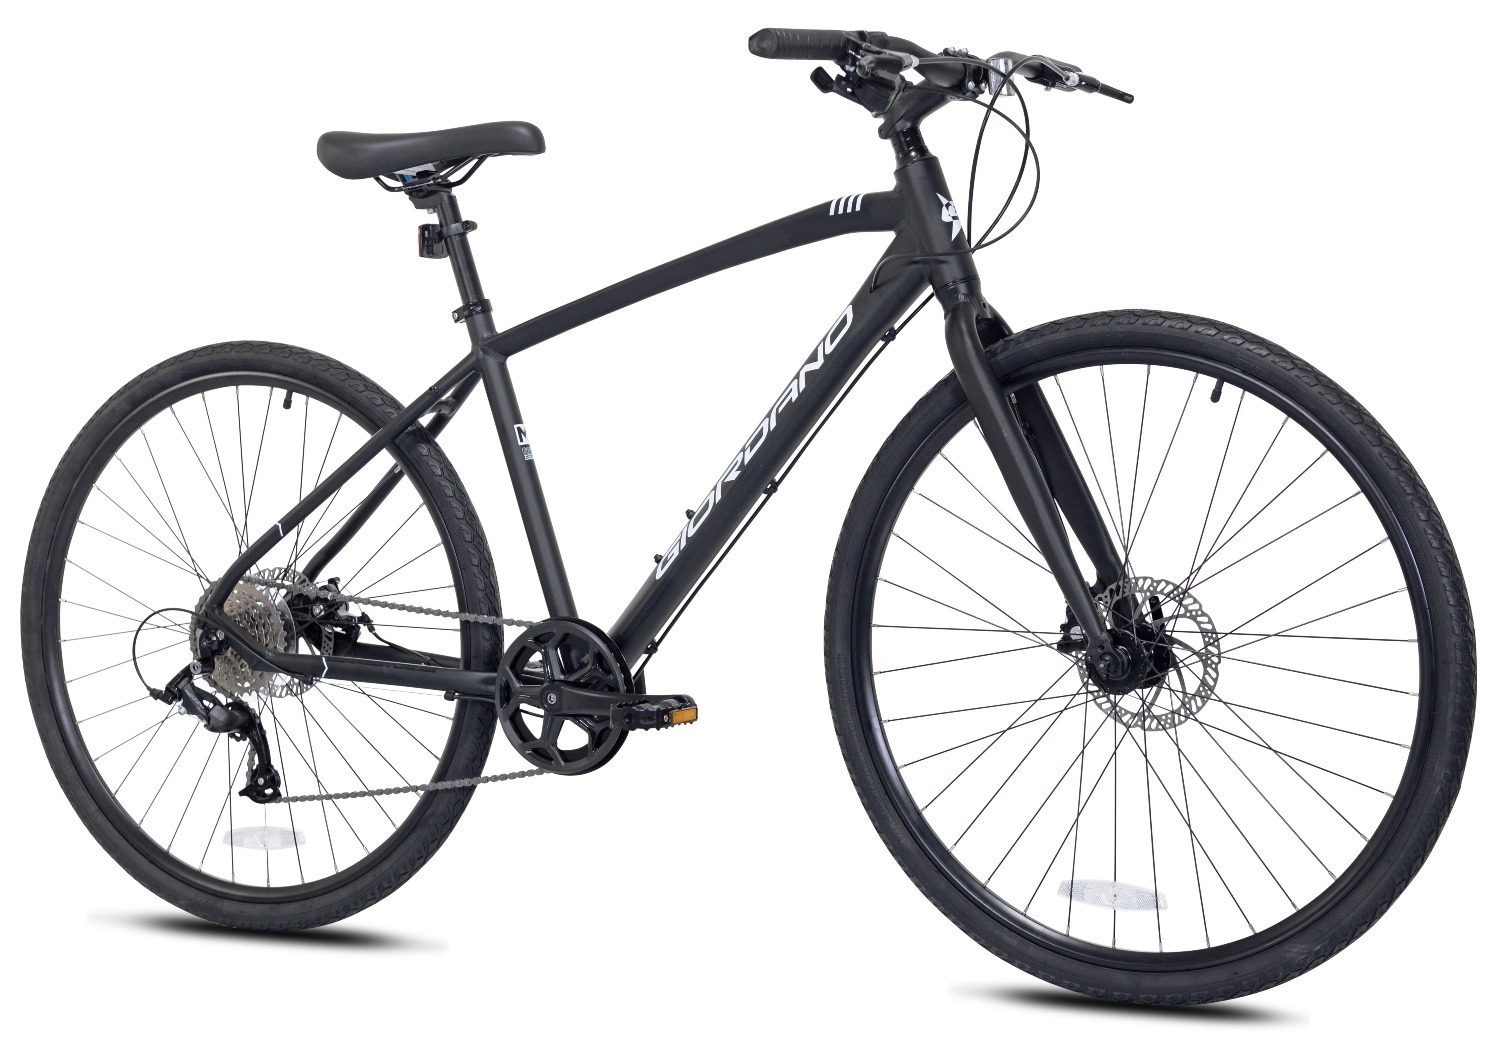 Giordano Bicycles H1 700c Hybrid Bike $270 + Free Shipping